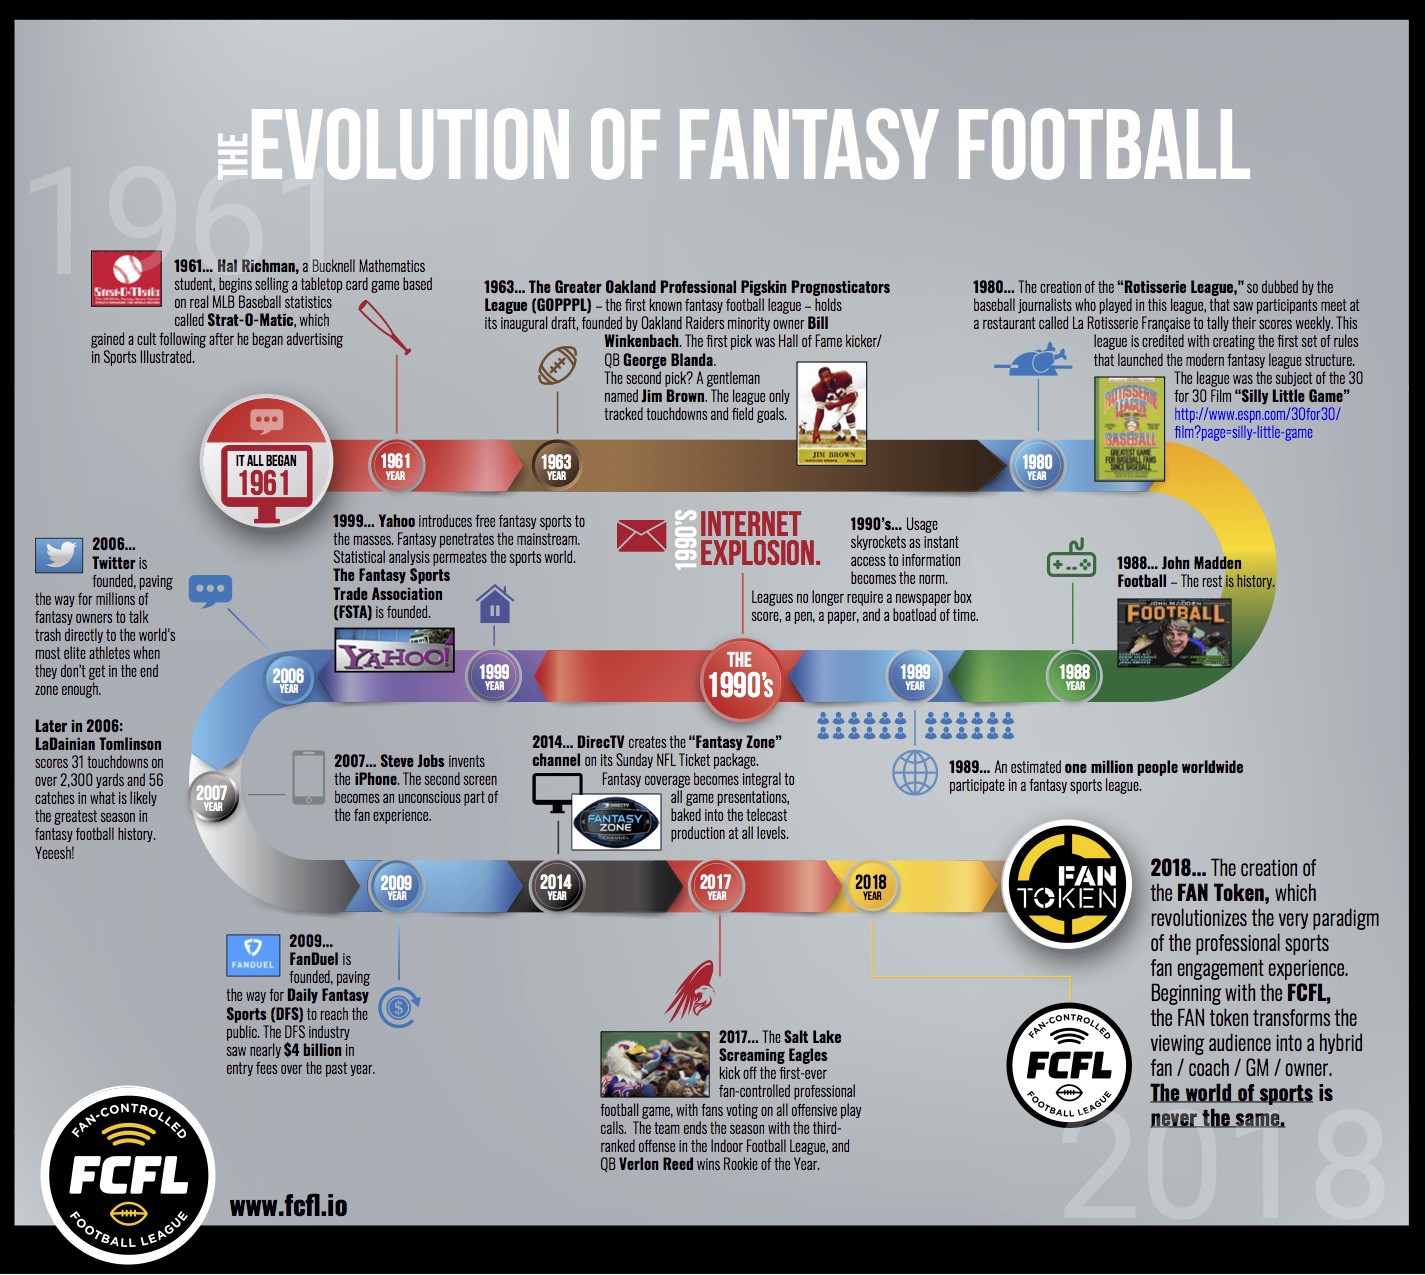 ESPN Fantasy Football Draft Board Kit – TrophySmack, 54% OFF